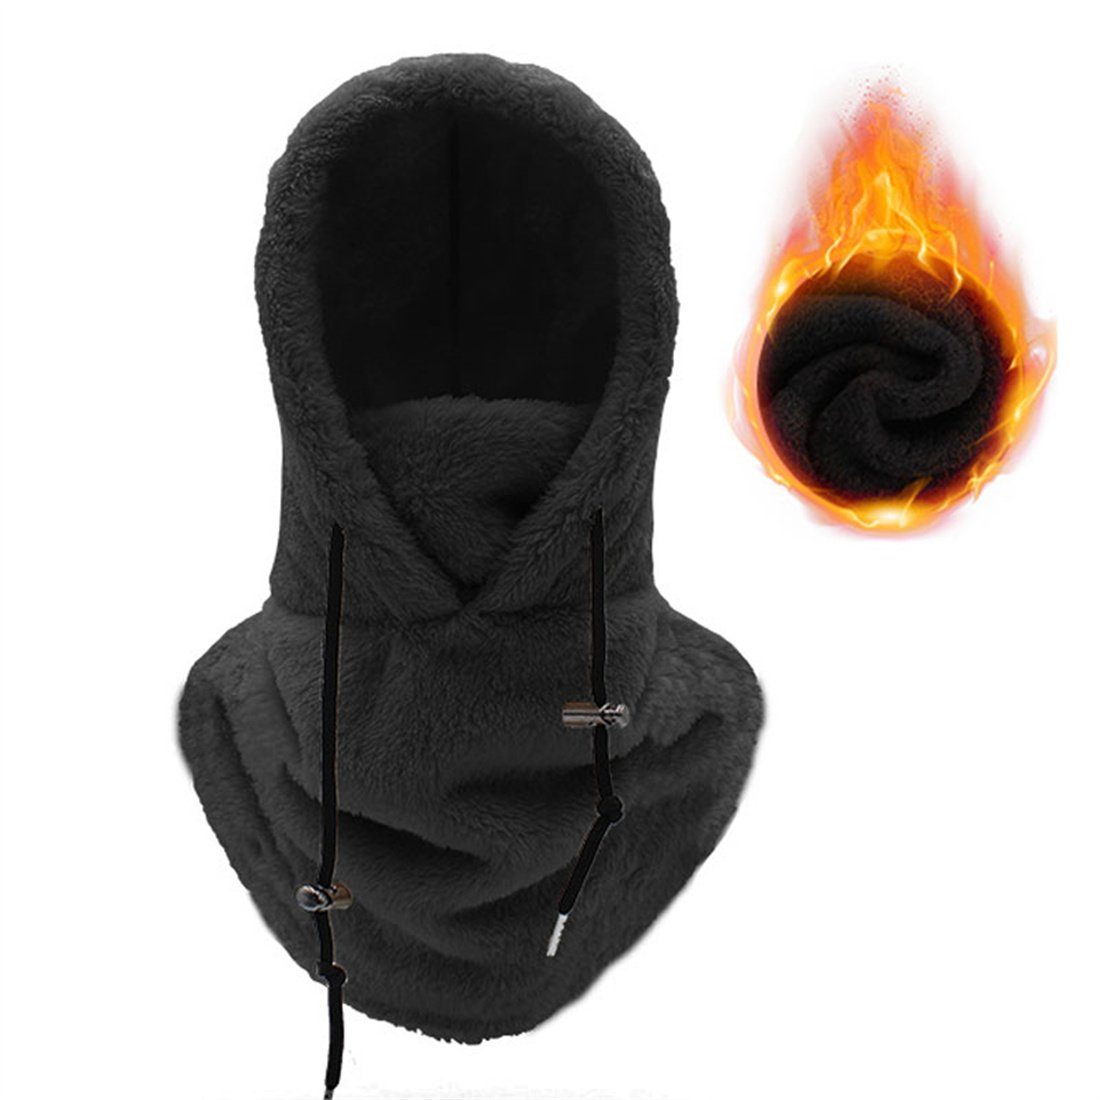 Warme Schwarz Maske,Multifunktionale DÖRÖY Reiten Sturmhaube Windproof Kopfbedeckung Ski Winter